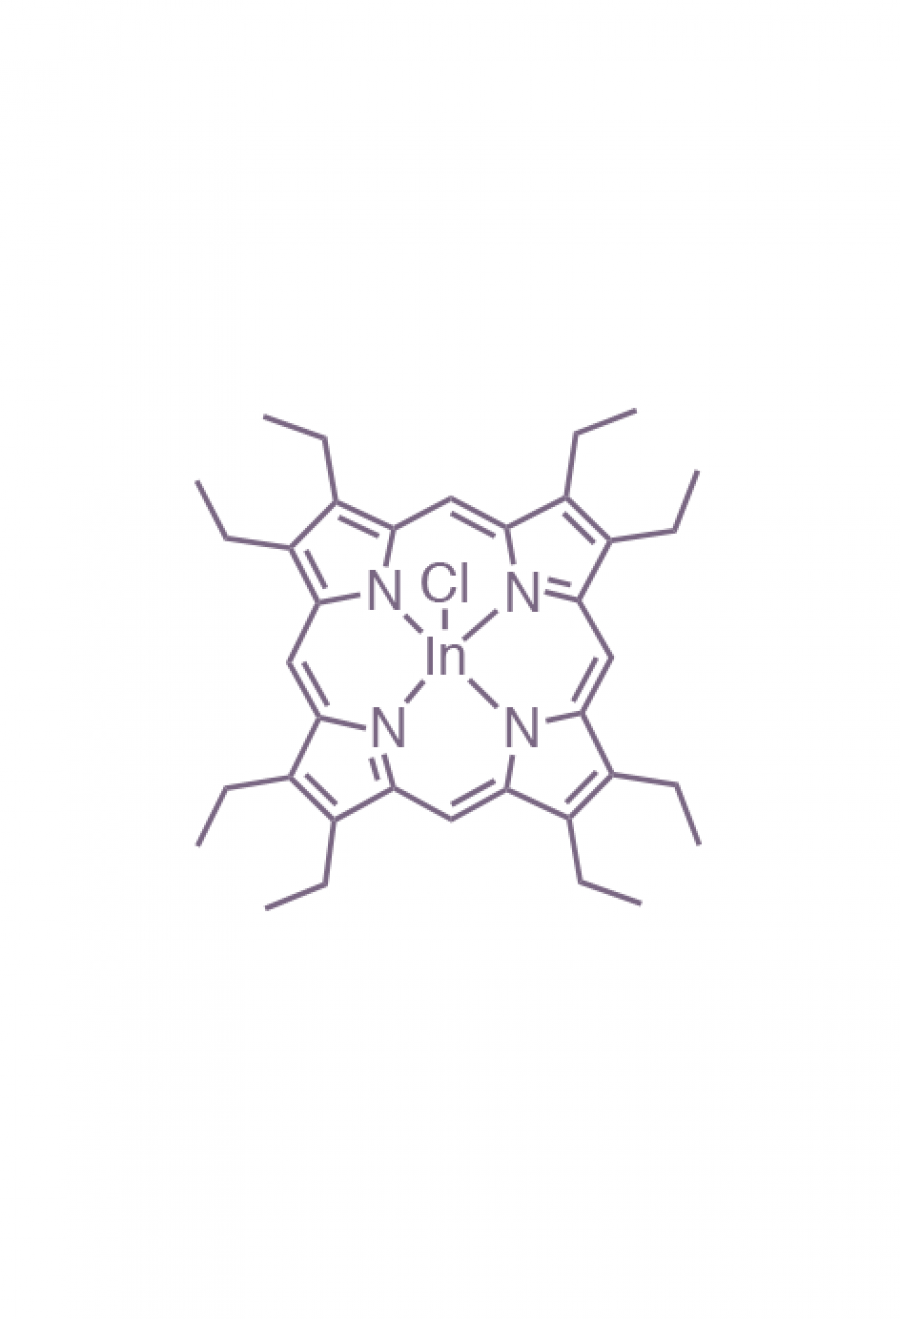 indium(III) 2,3,7,8,12,13,17,18-(octaethyl)porphyrin chloride  | Porphychem Expert porphyrin synthesis for research & industry